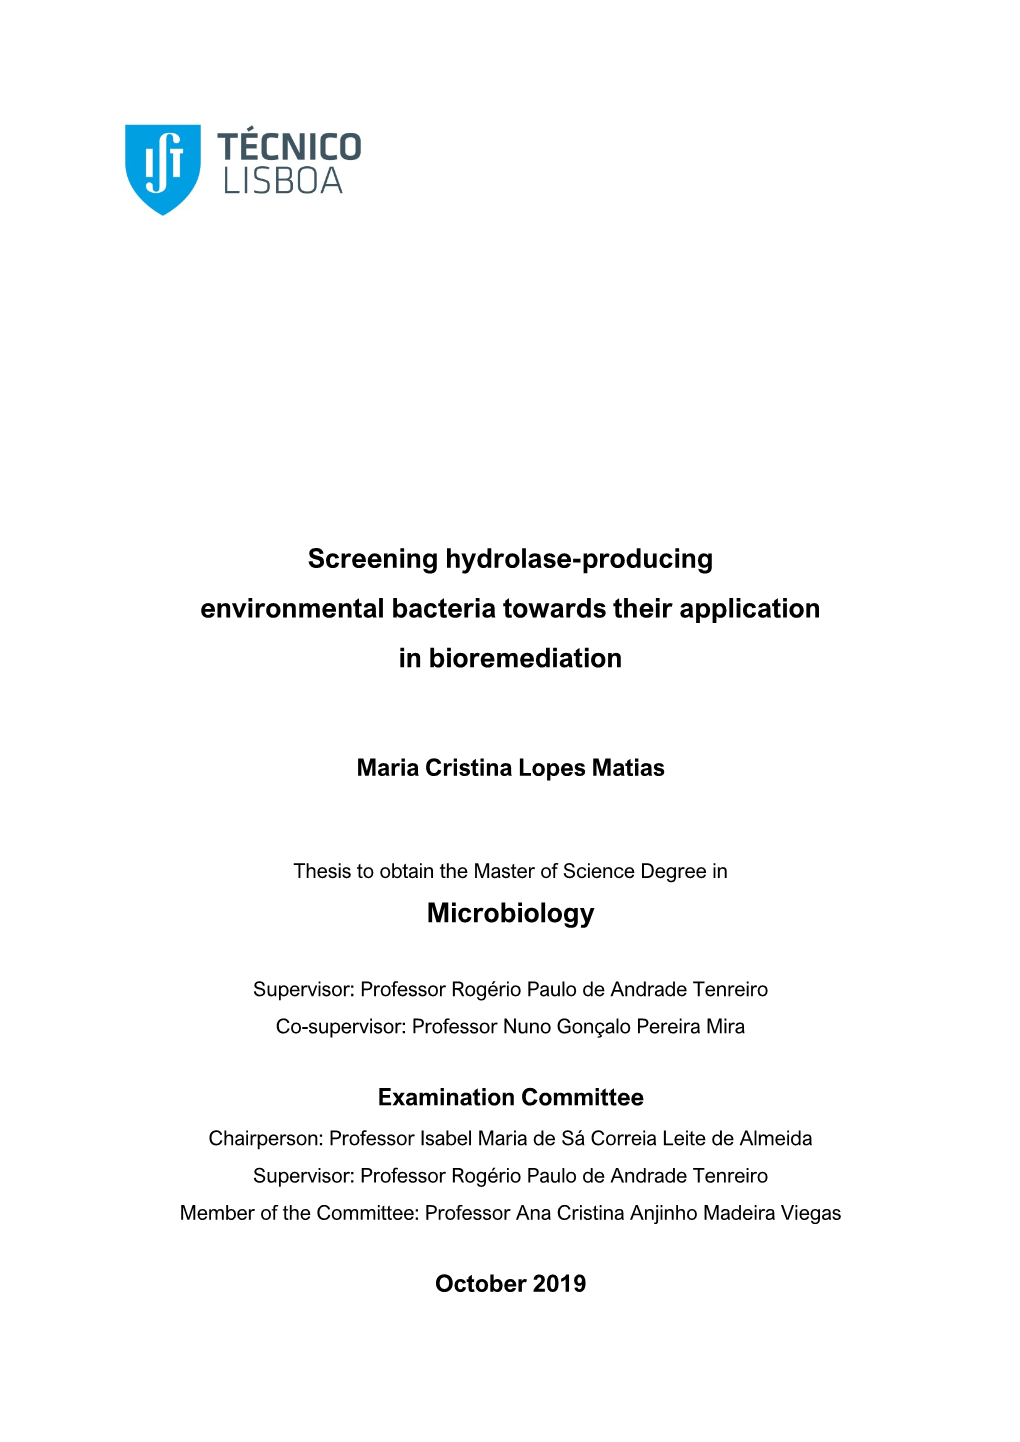 Screening Hydrolase-Producing Environmental Bacteria Towards Their Application in Bioremediation Microbiology